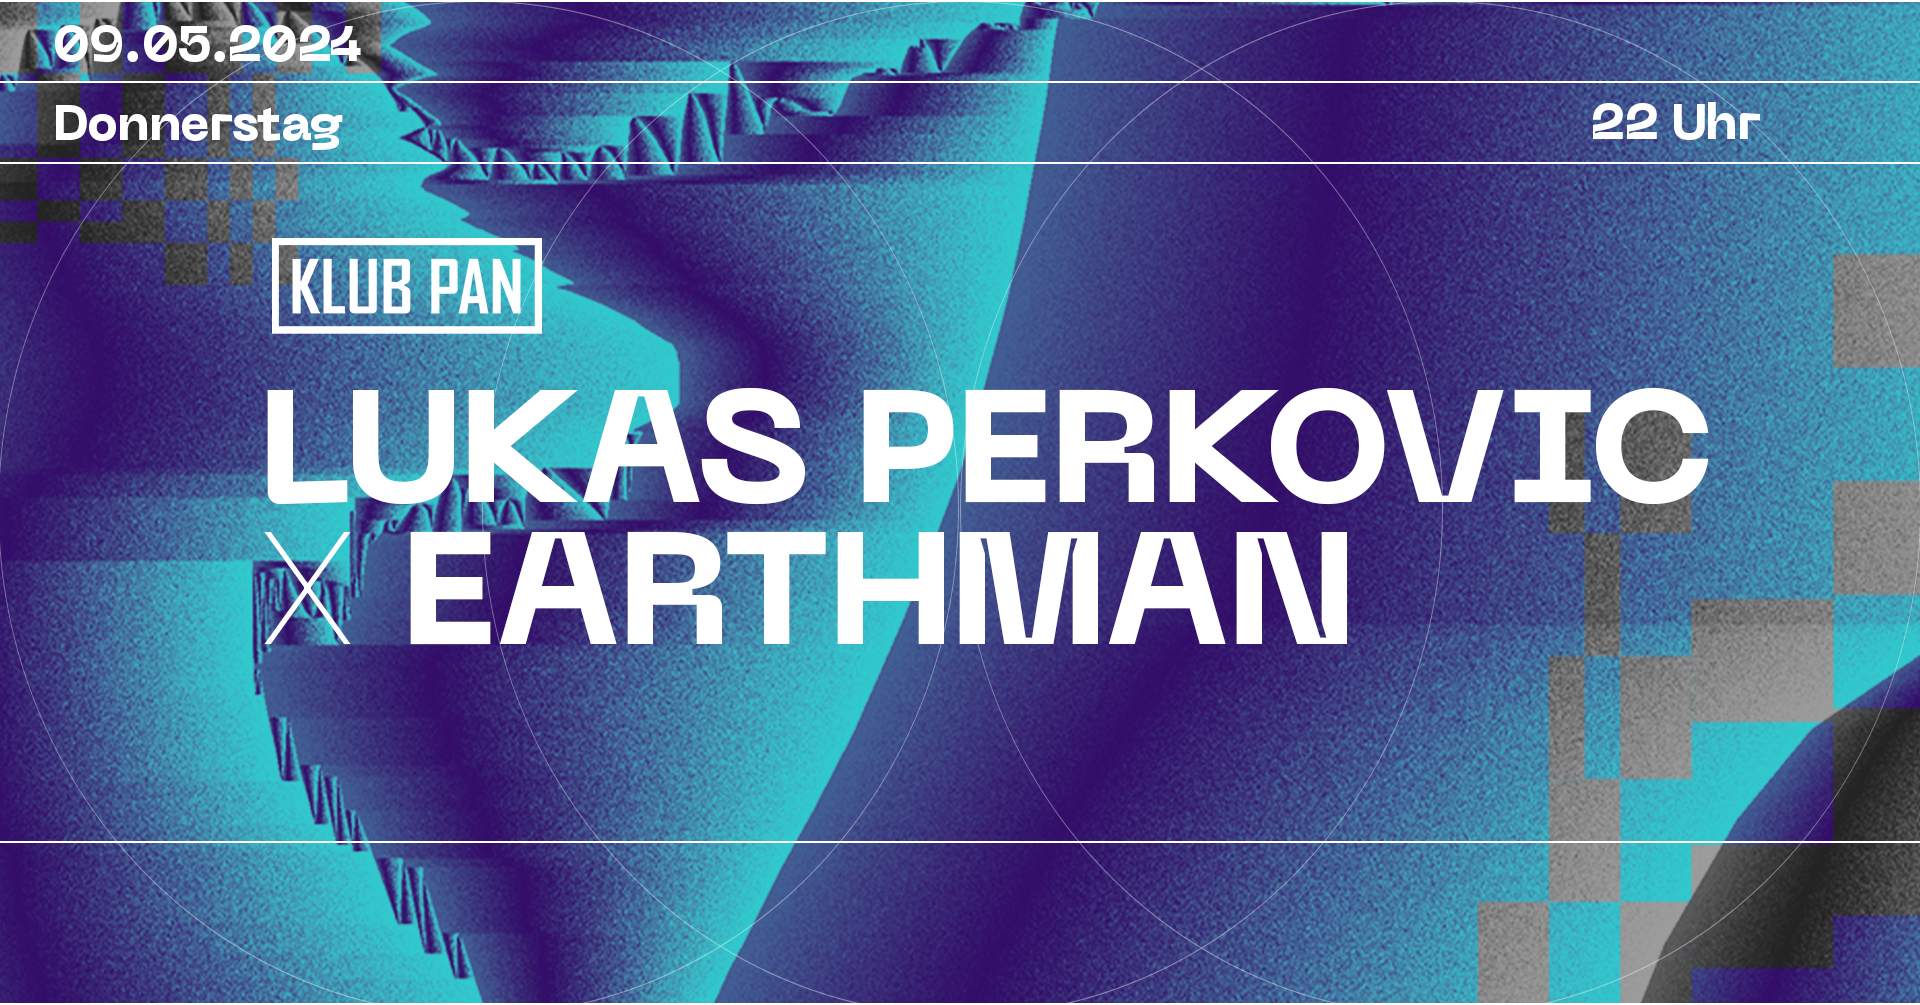 Lukas Perkovic x Earthman - フライヤー表